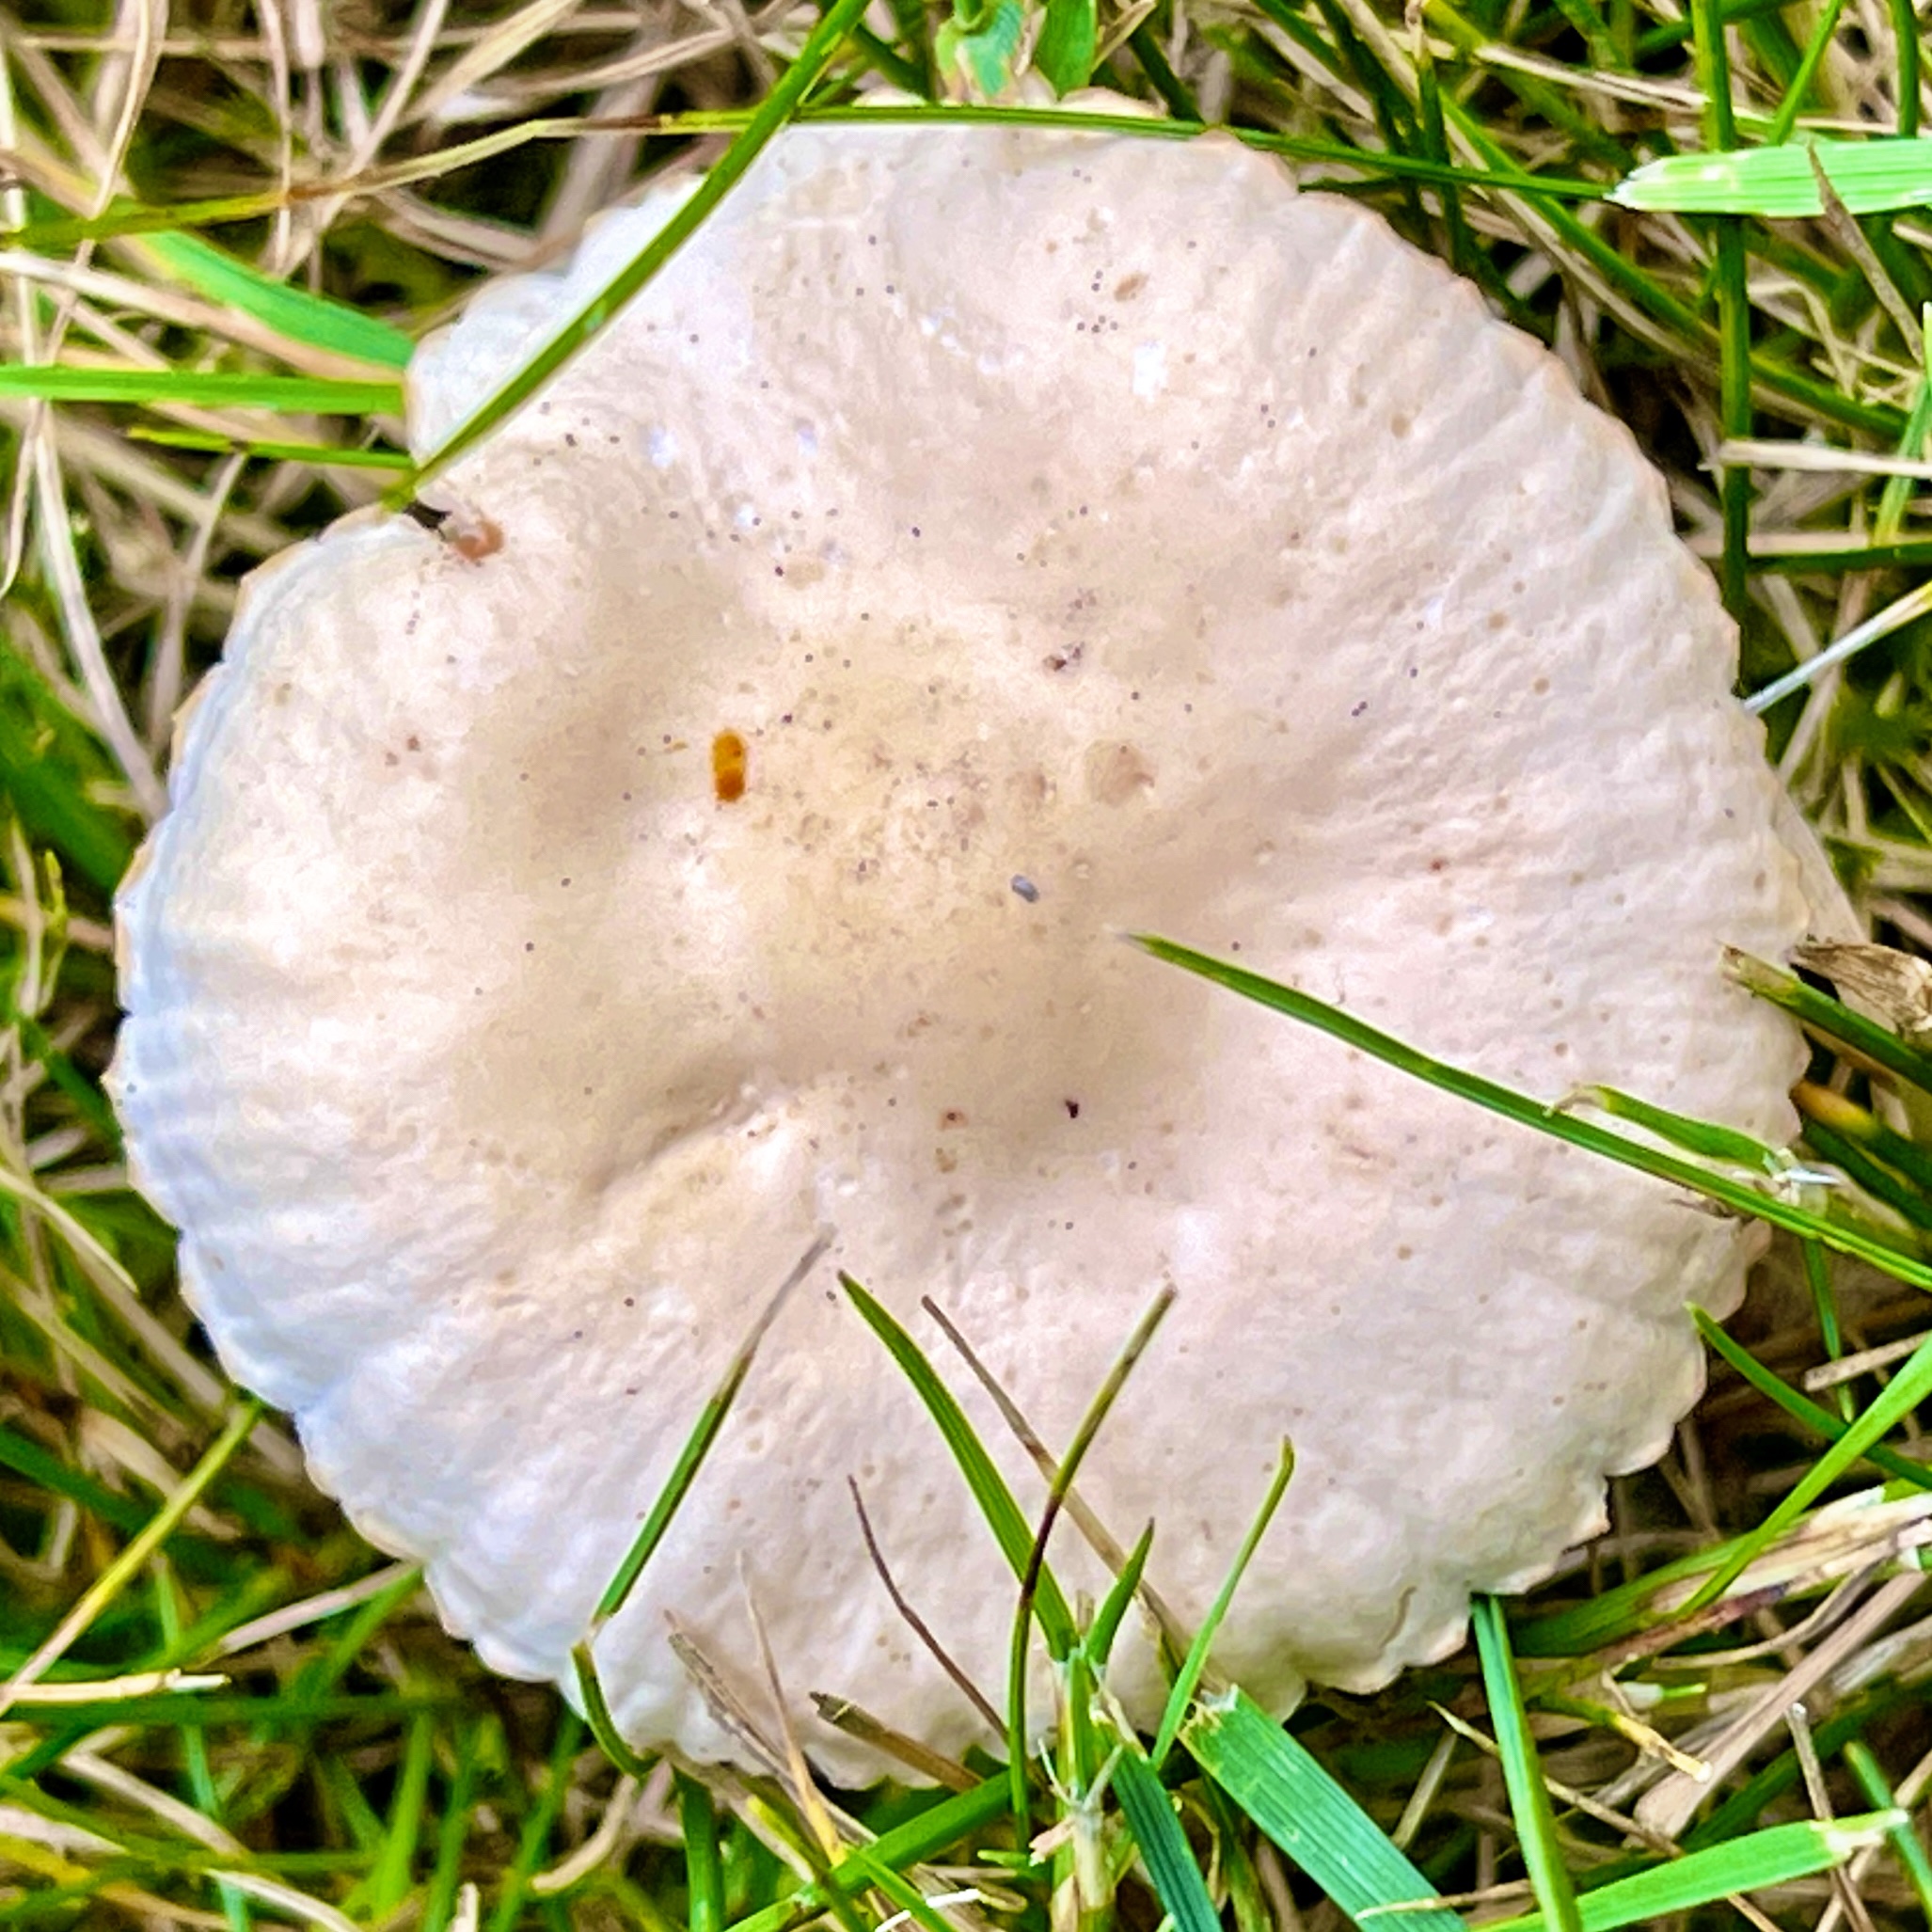 Is it a toadstool or mushroom?